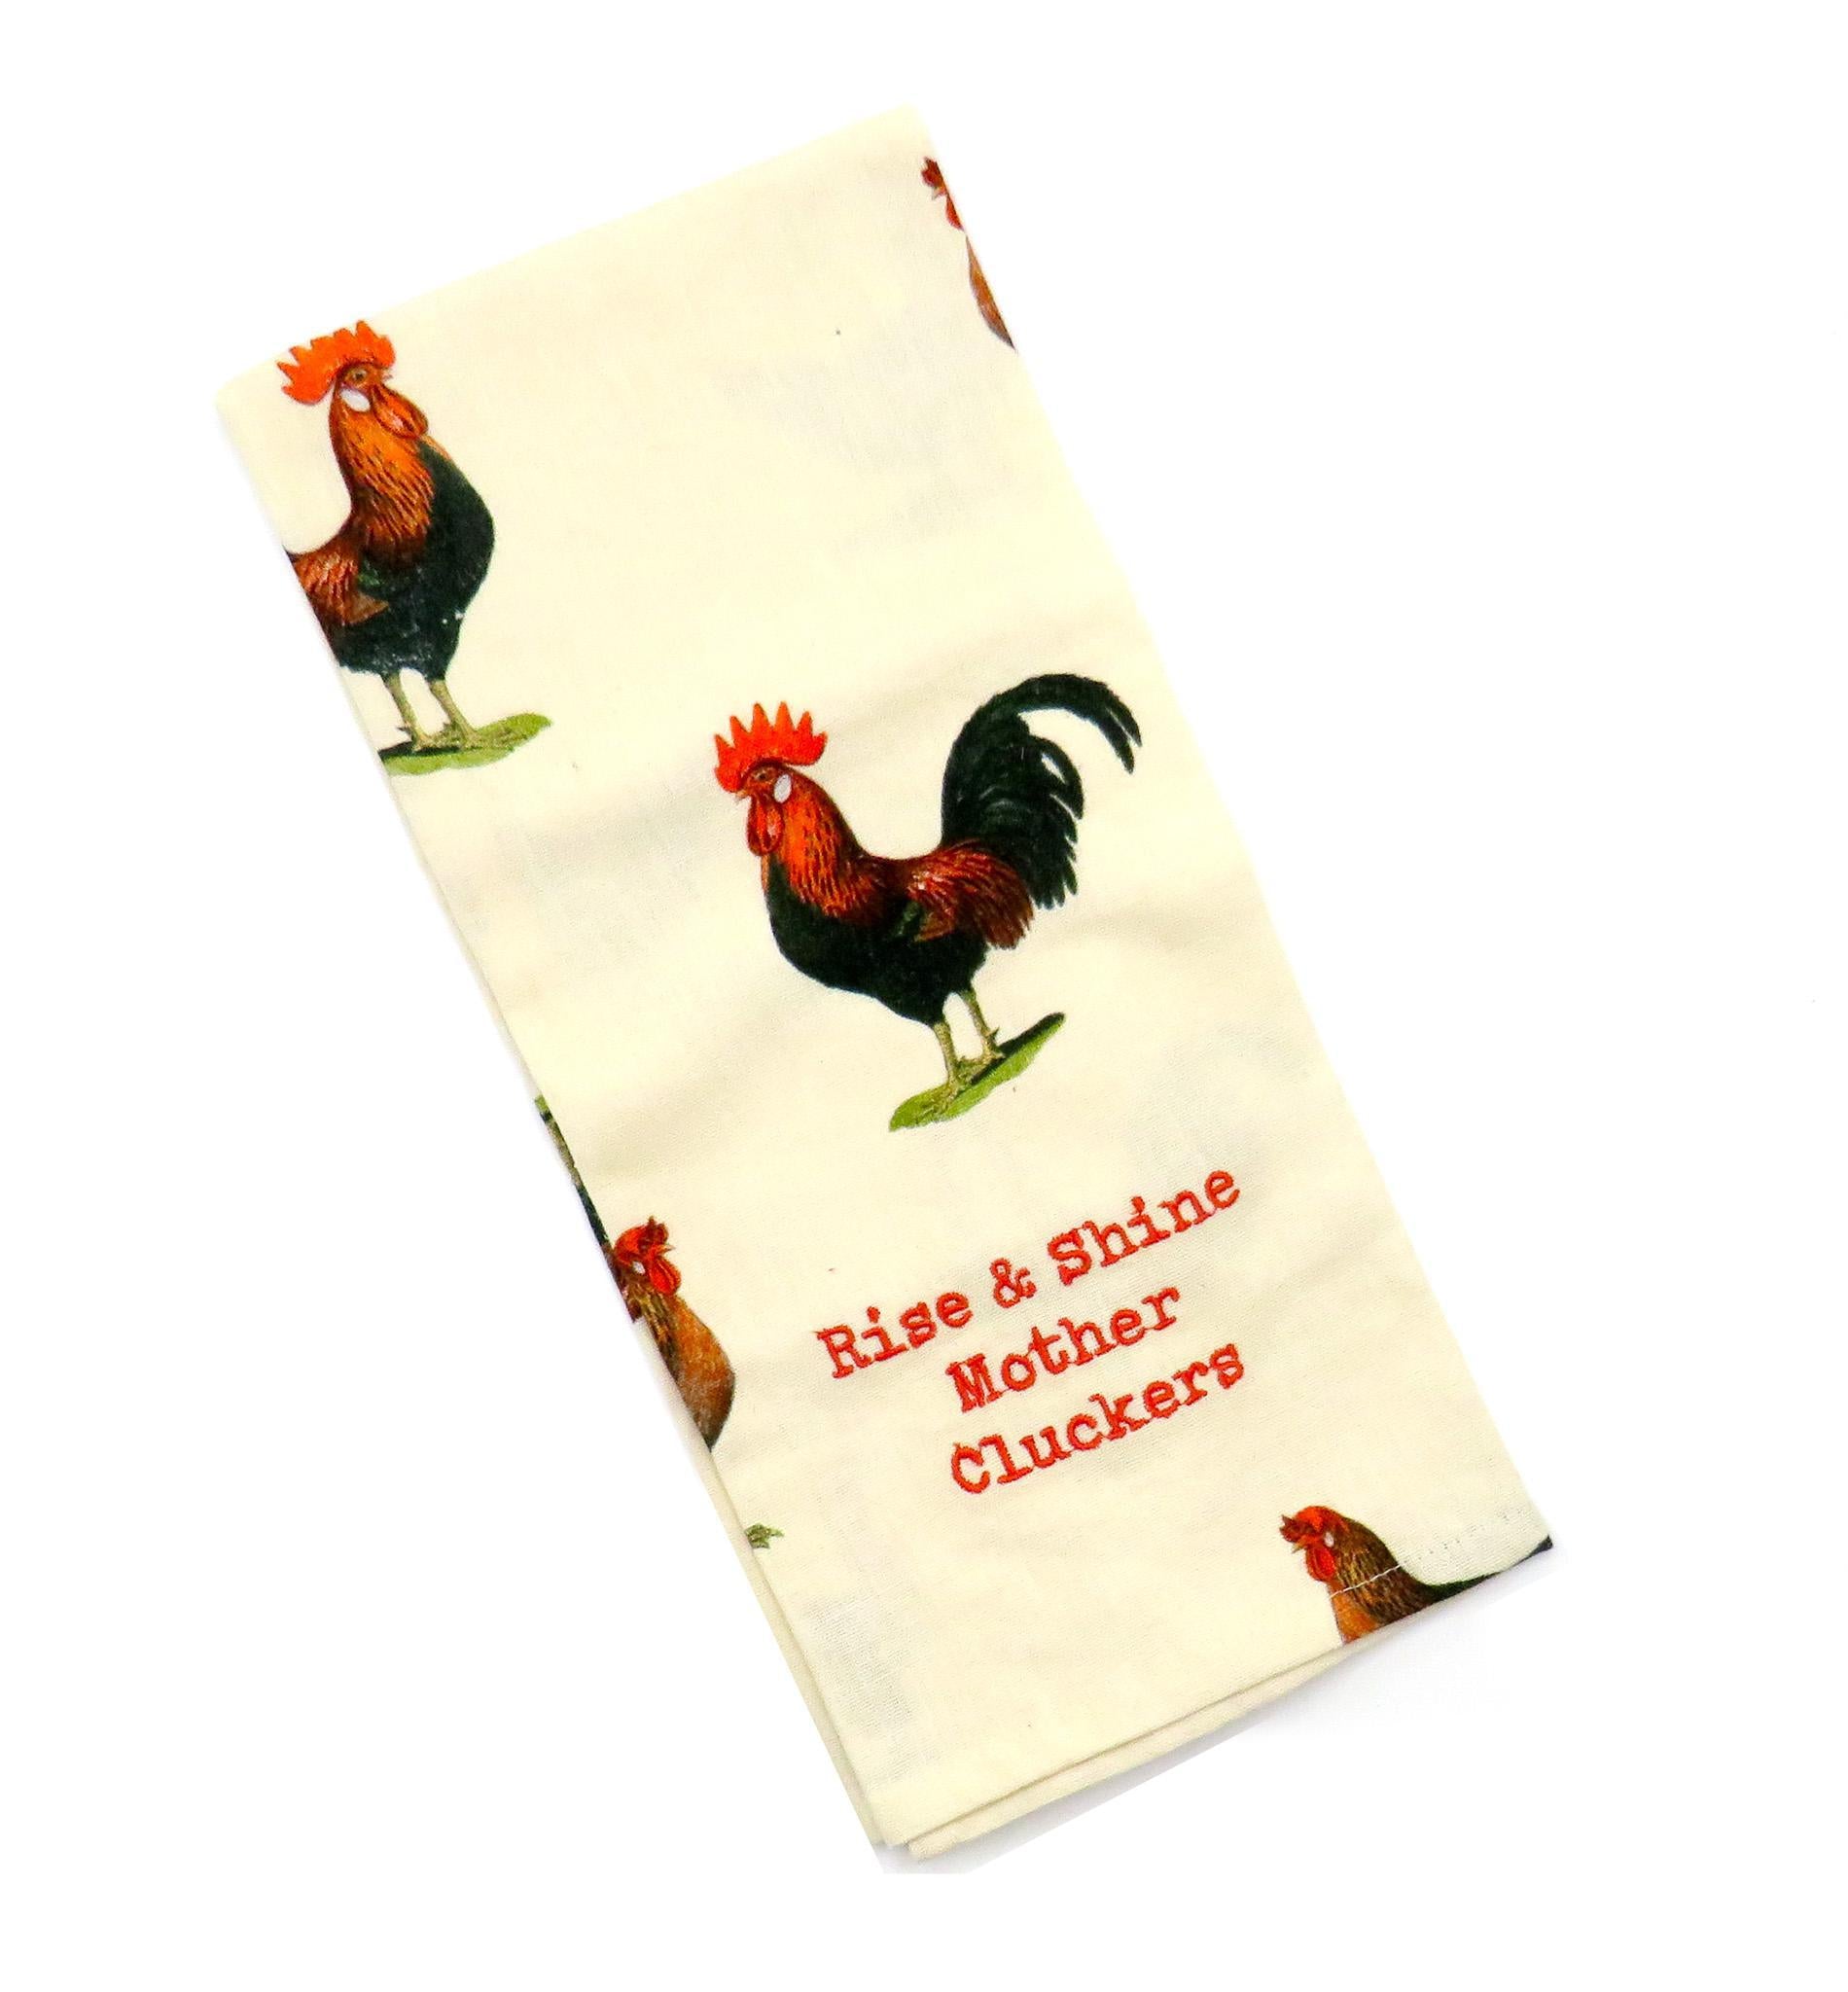 Chicken Kitchen Towel, Funny Kitchen Towel, Chicken Towel, Funny